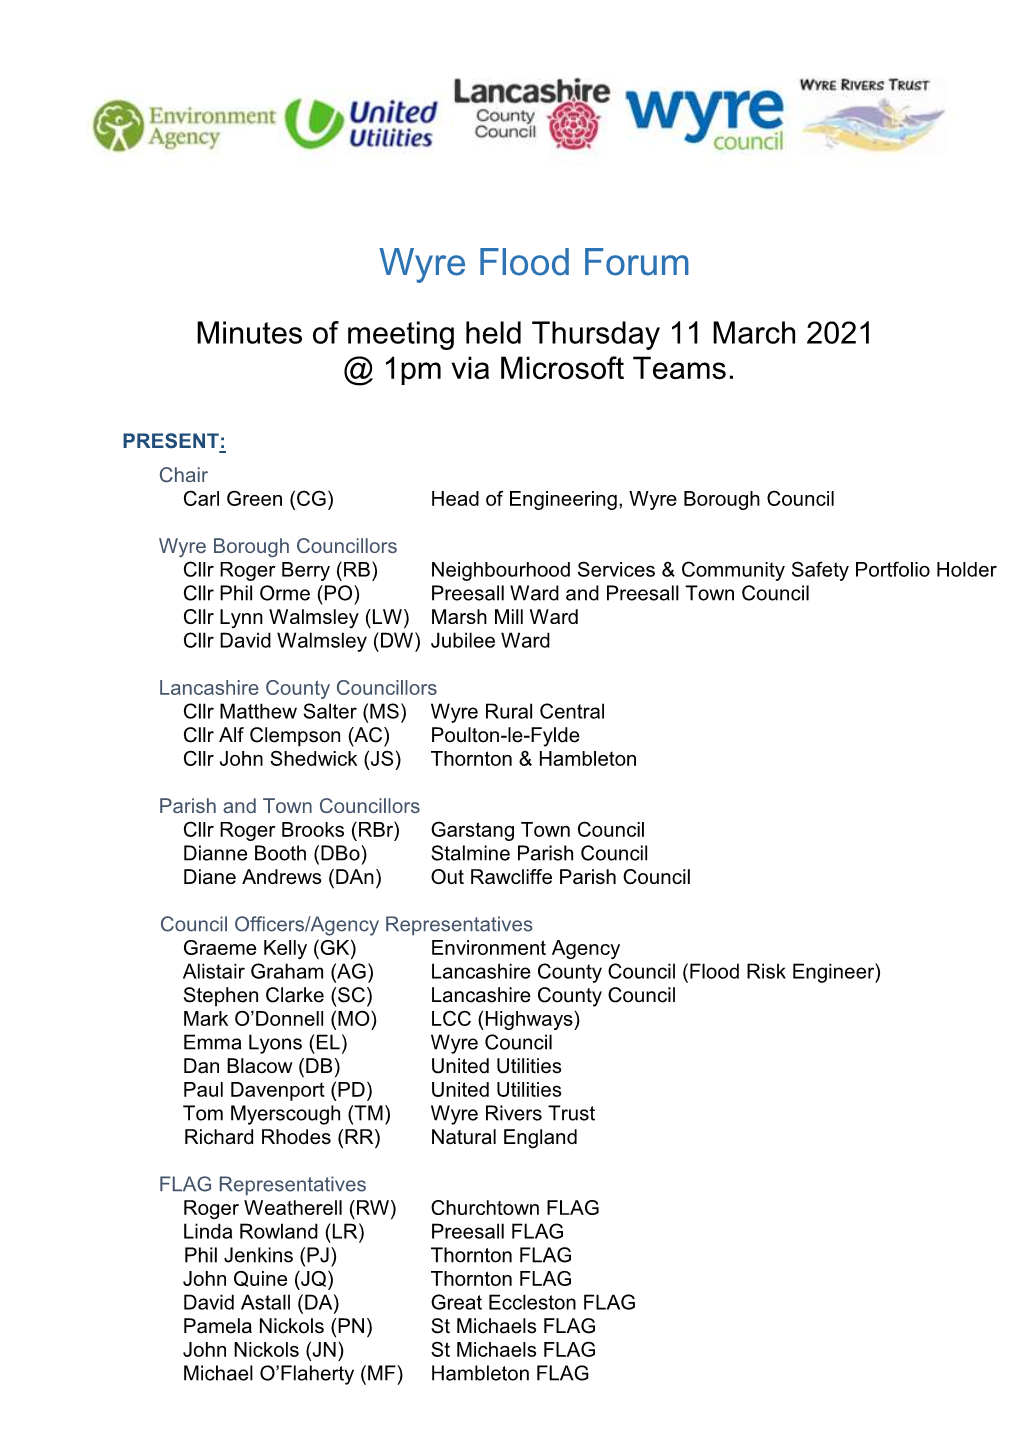 Flood Forum Minutes 11 March 2021